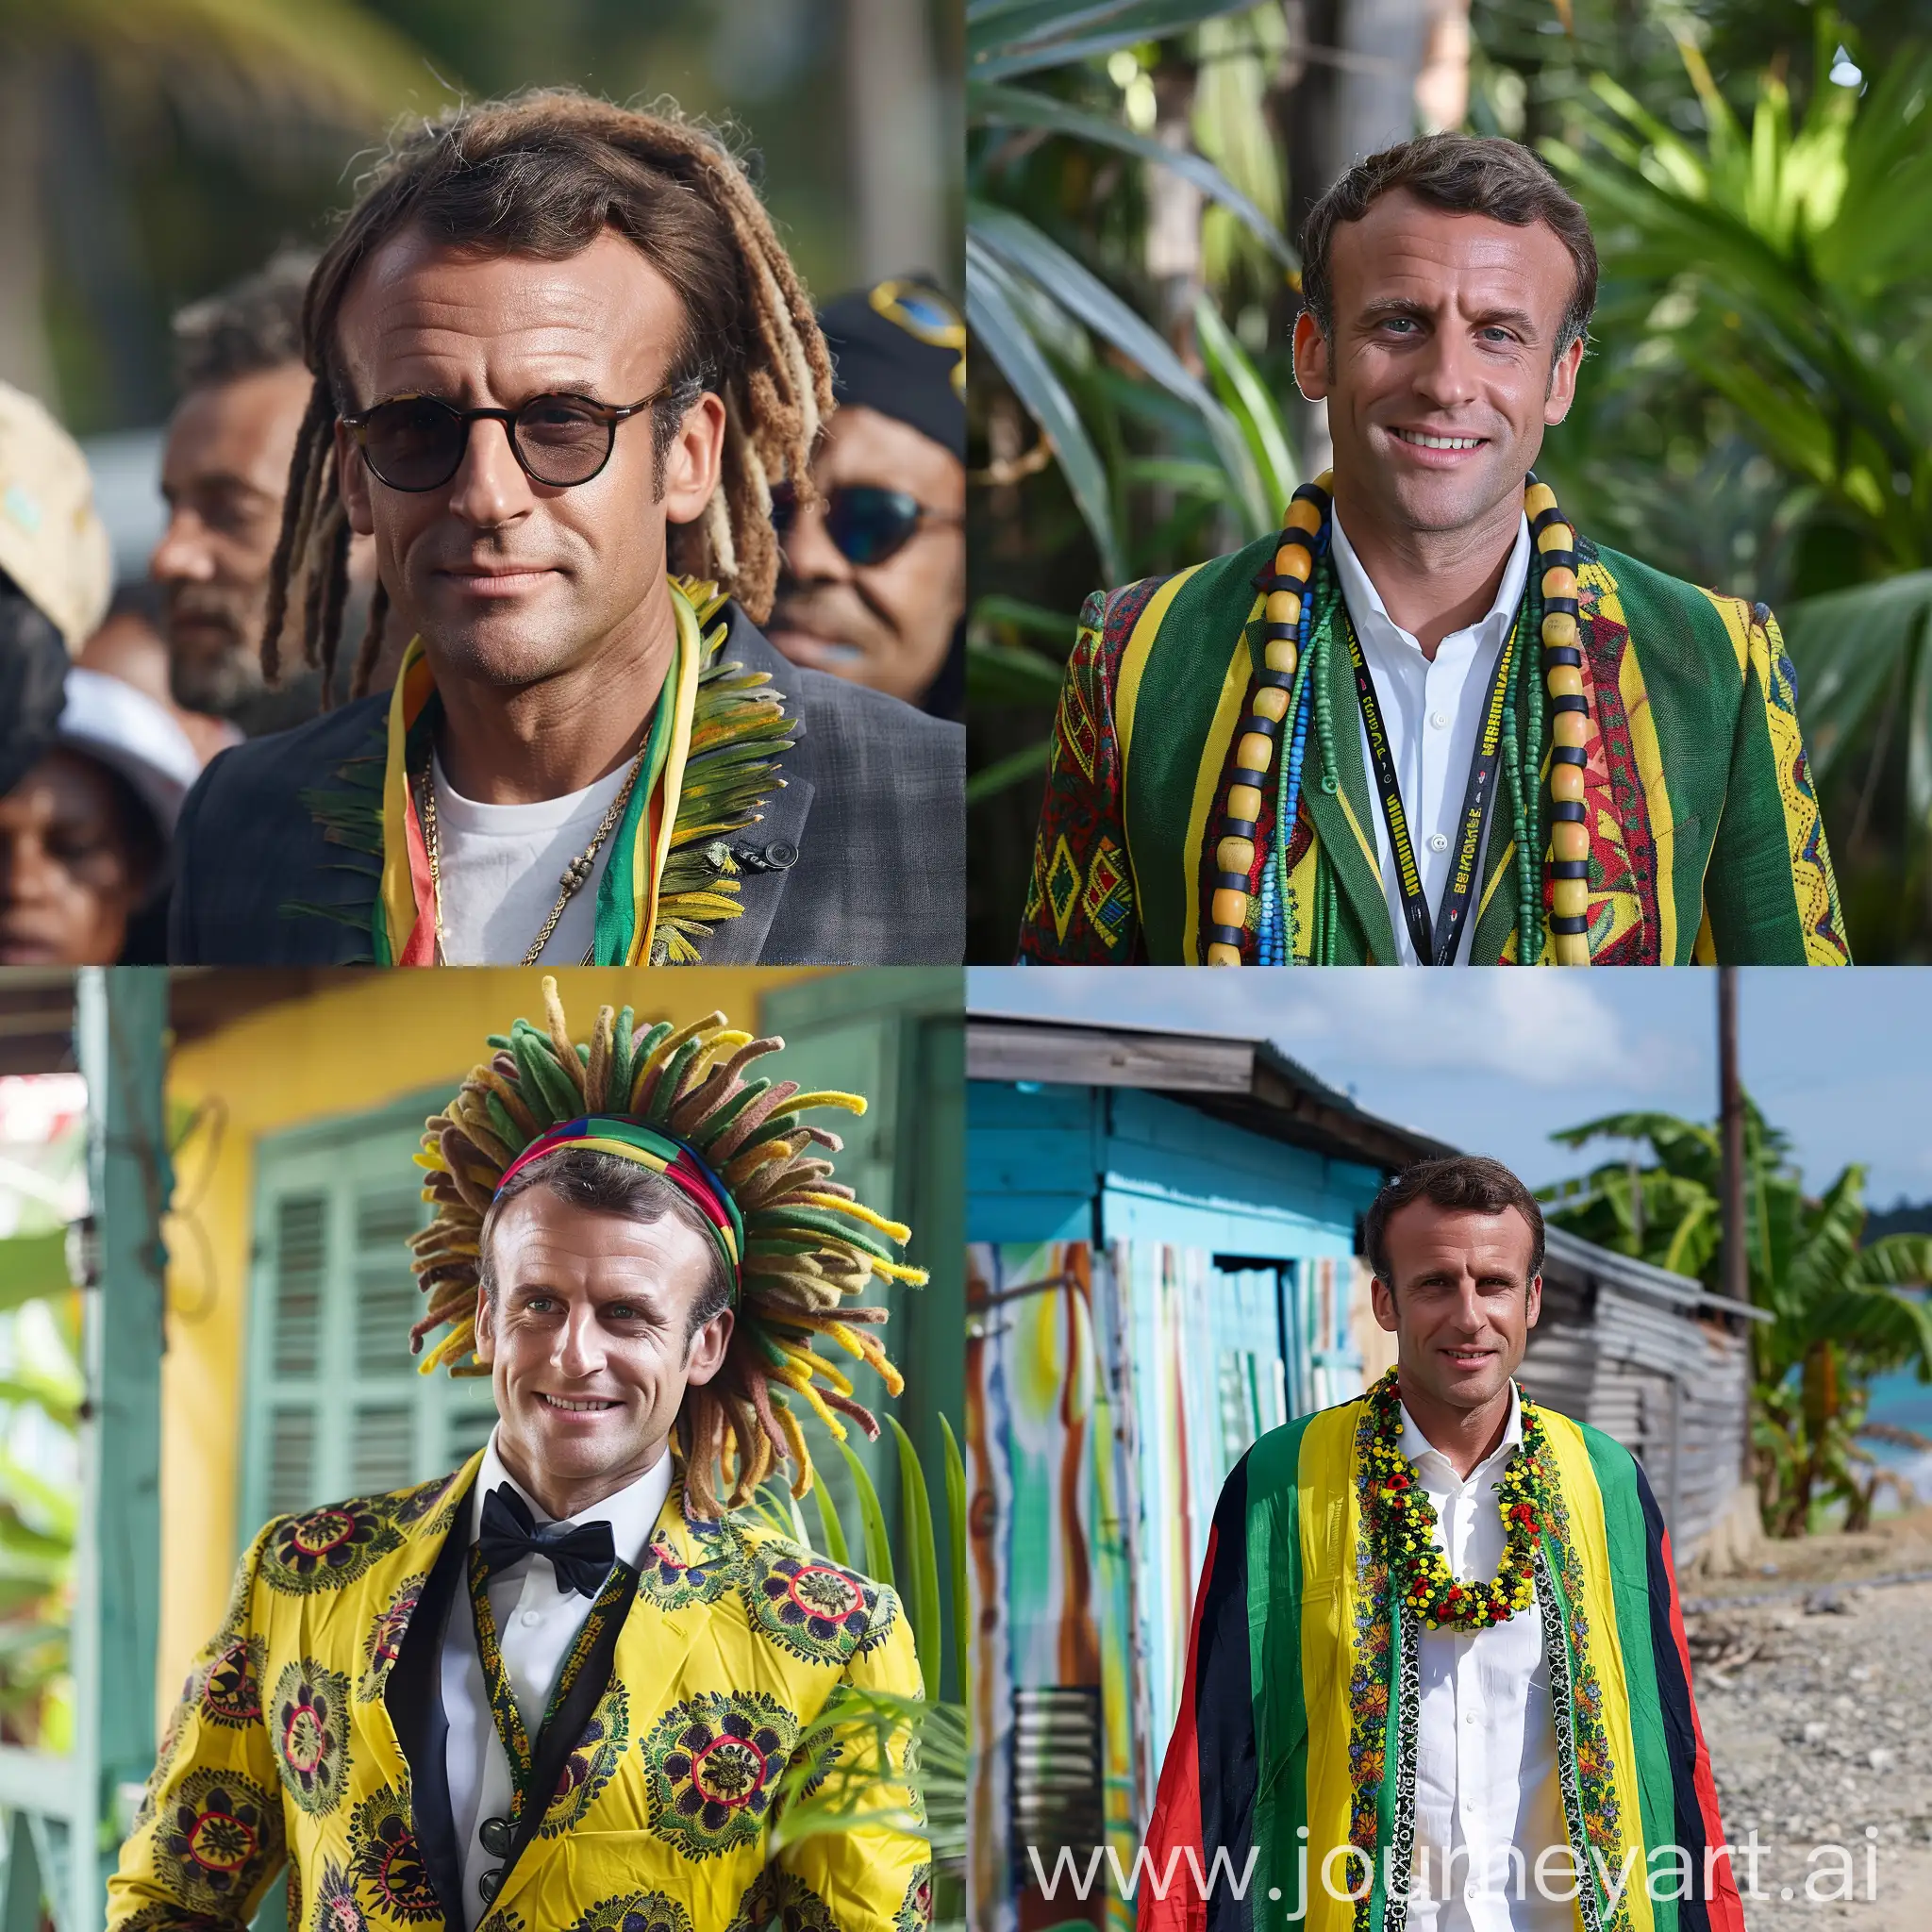 Emanuel macron en mode rasta-man en jamaique 